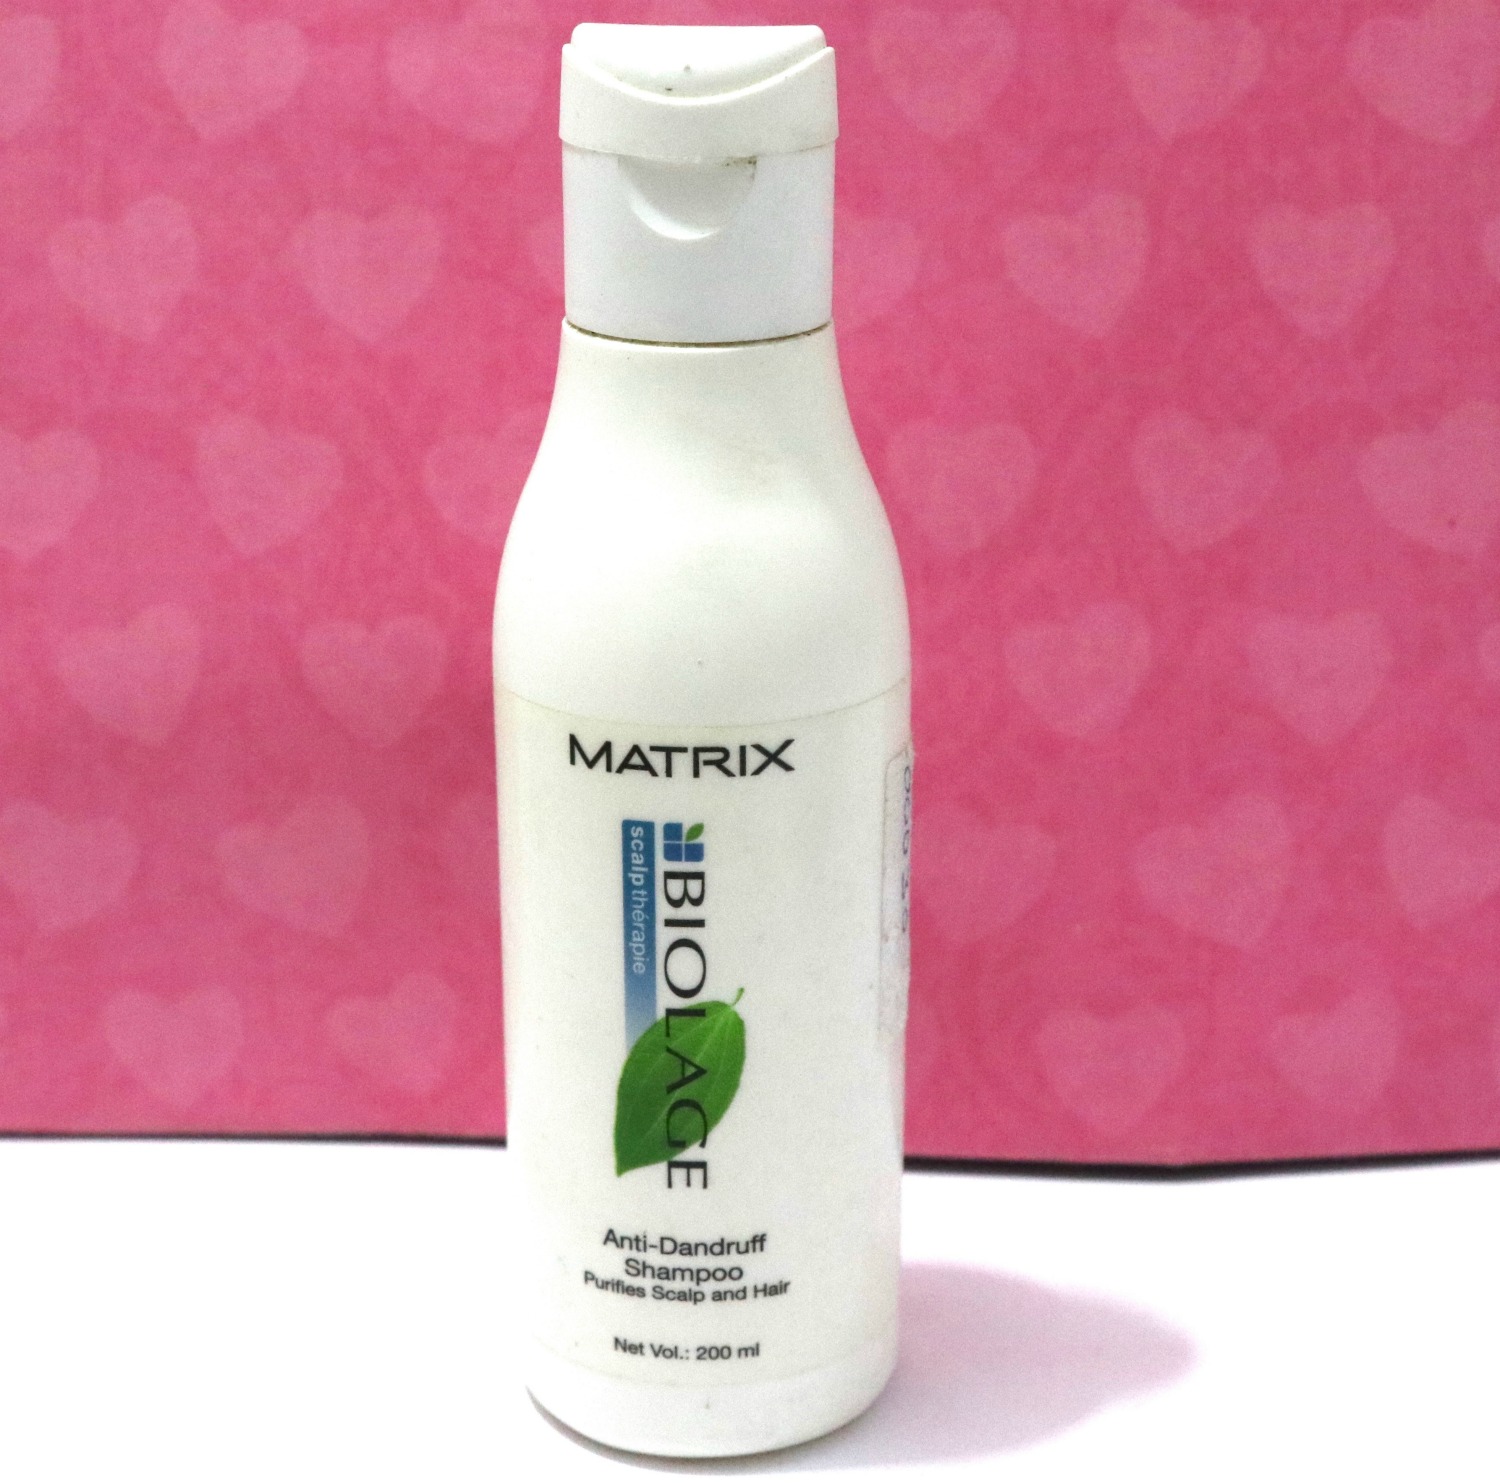 Matrix Biolage Anti Dandruff Shampoo Review